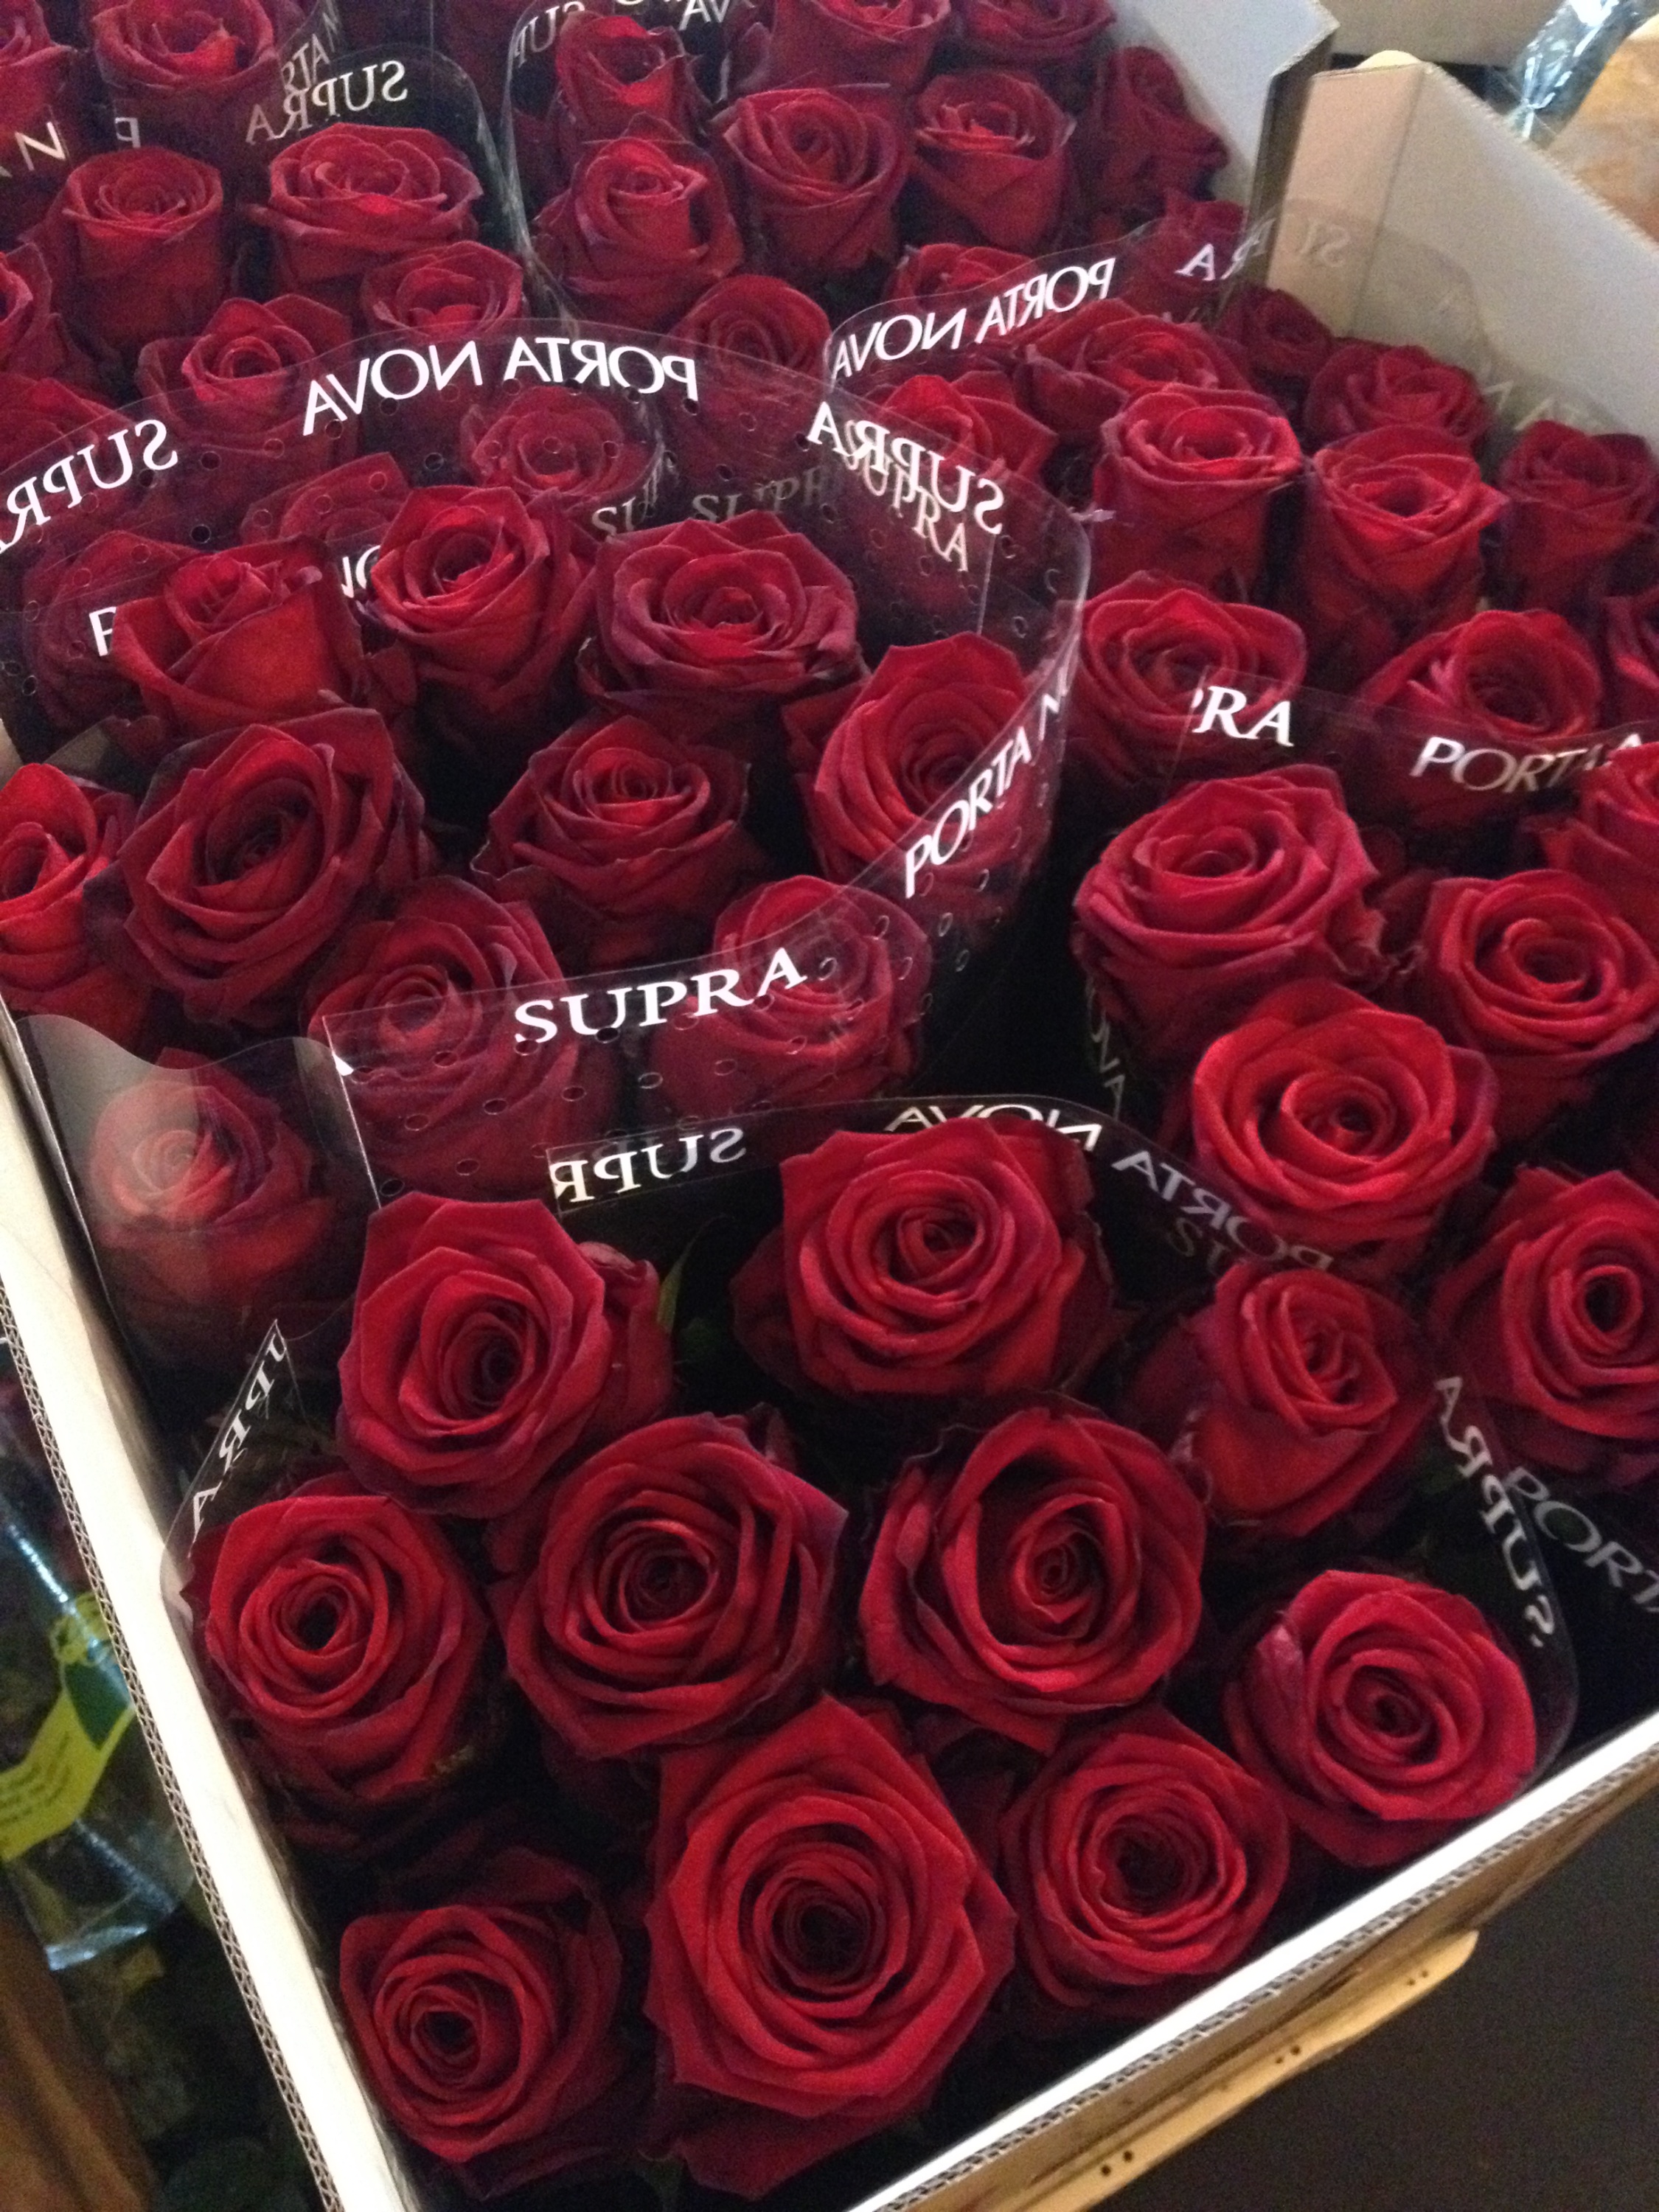 thomas rinaldi porta nova roses